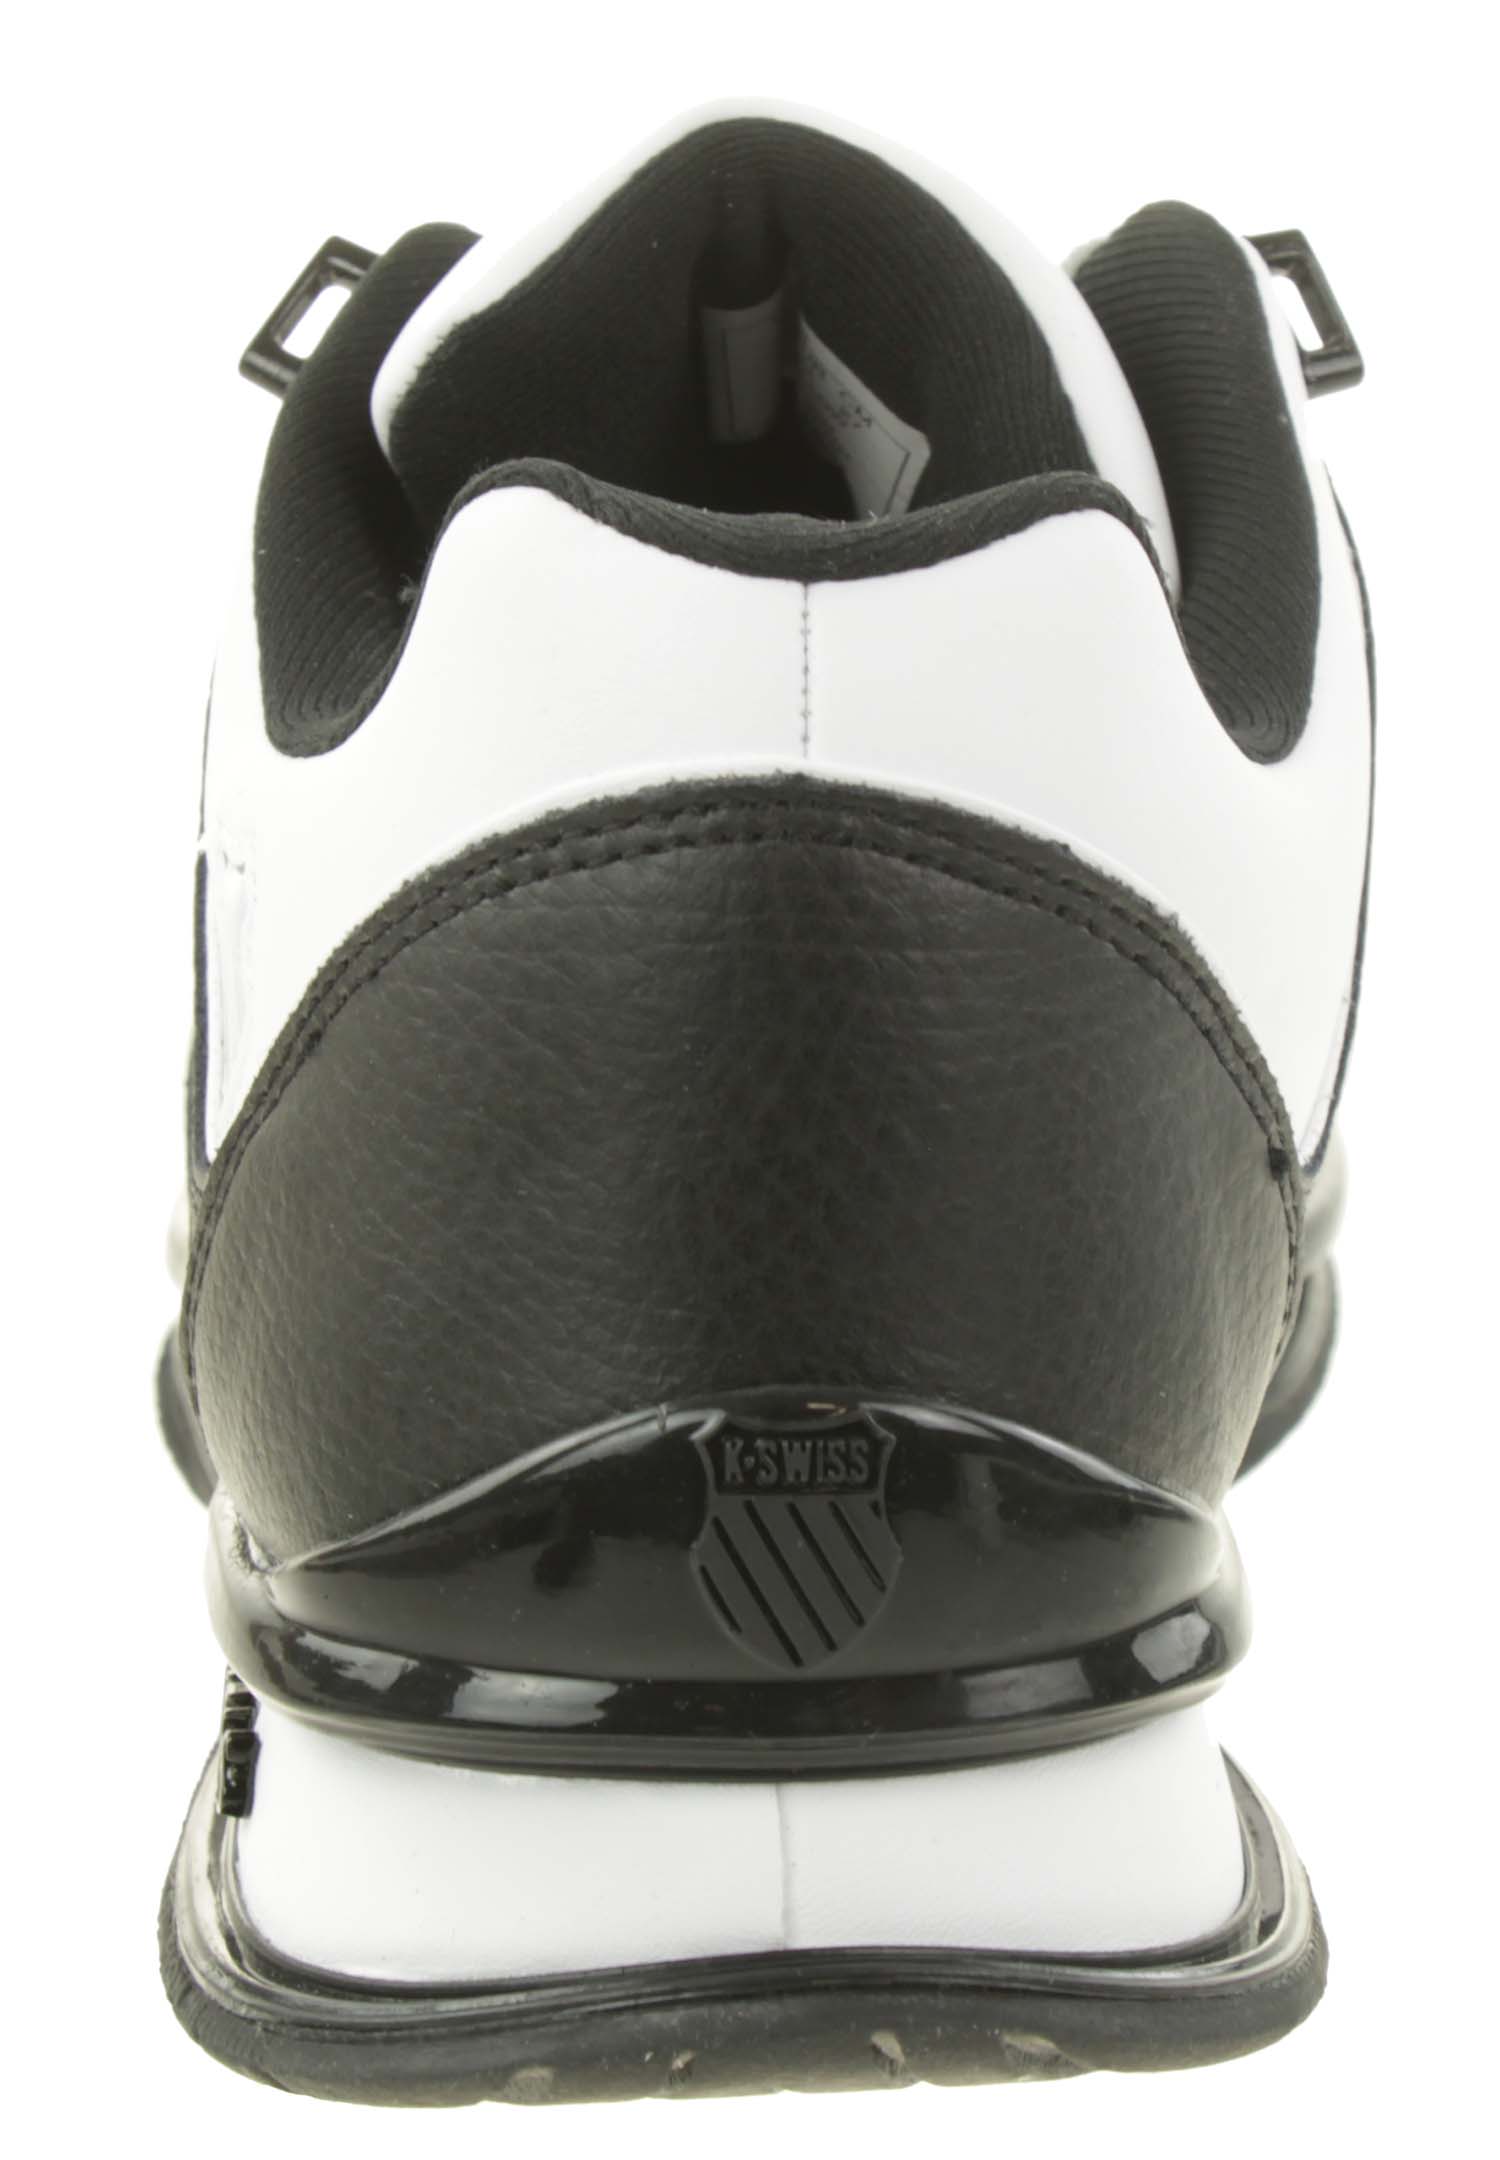 K-Swiss Rinzler Herren Sneaker Sportschuh 01235-944-M weiss schwarz